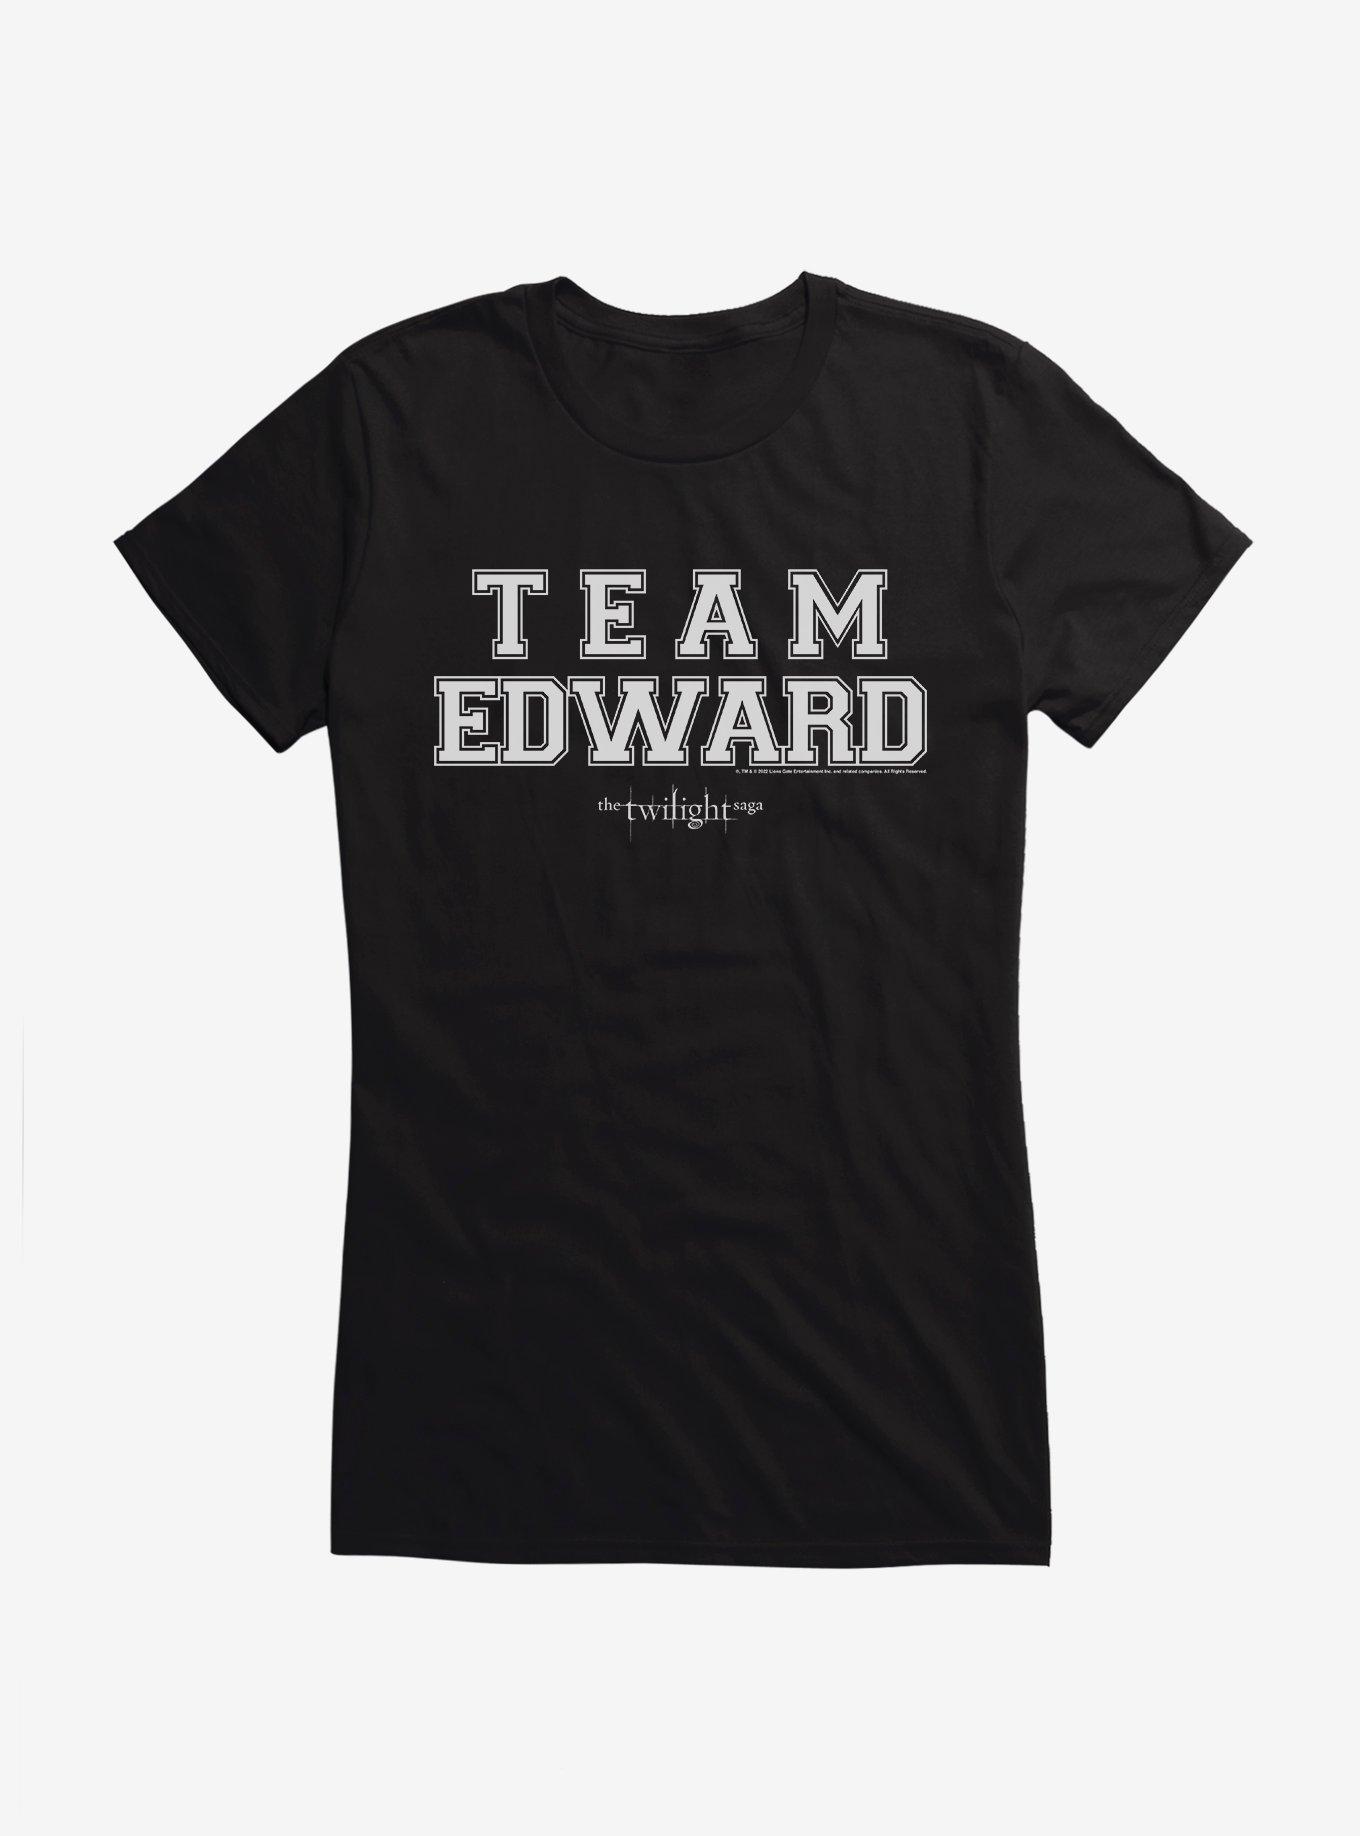 Twilight Team Edward Collegiate Font Girls T-Shirt